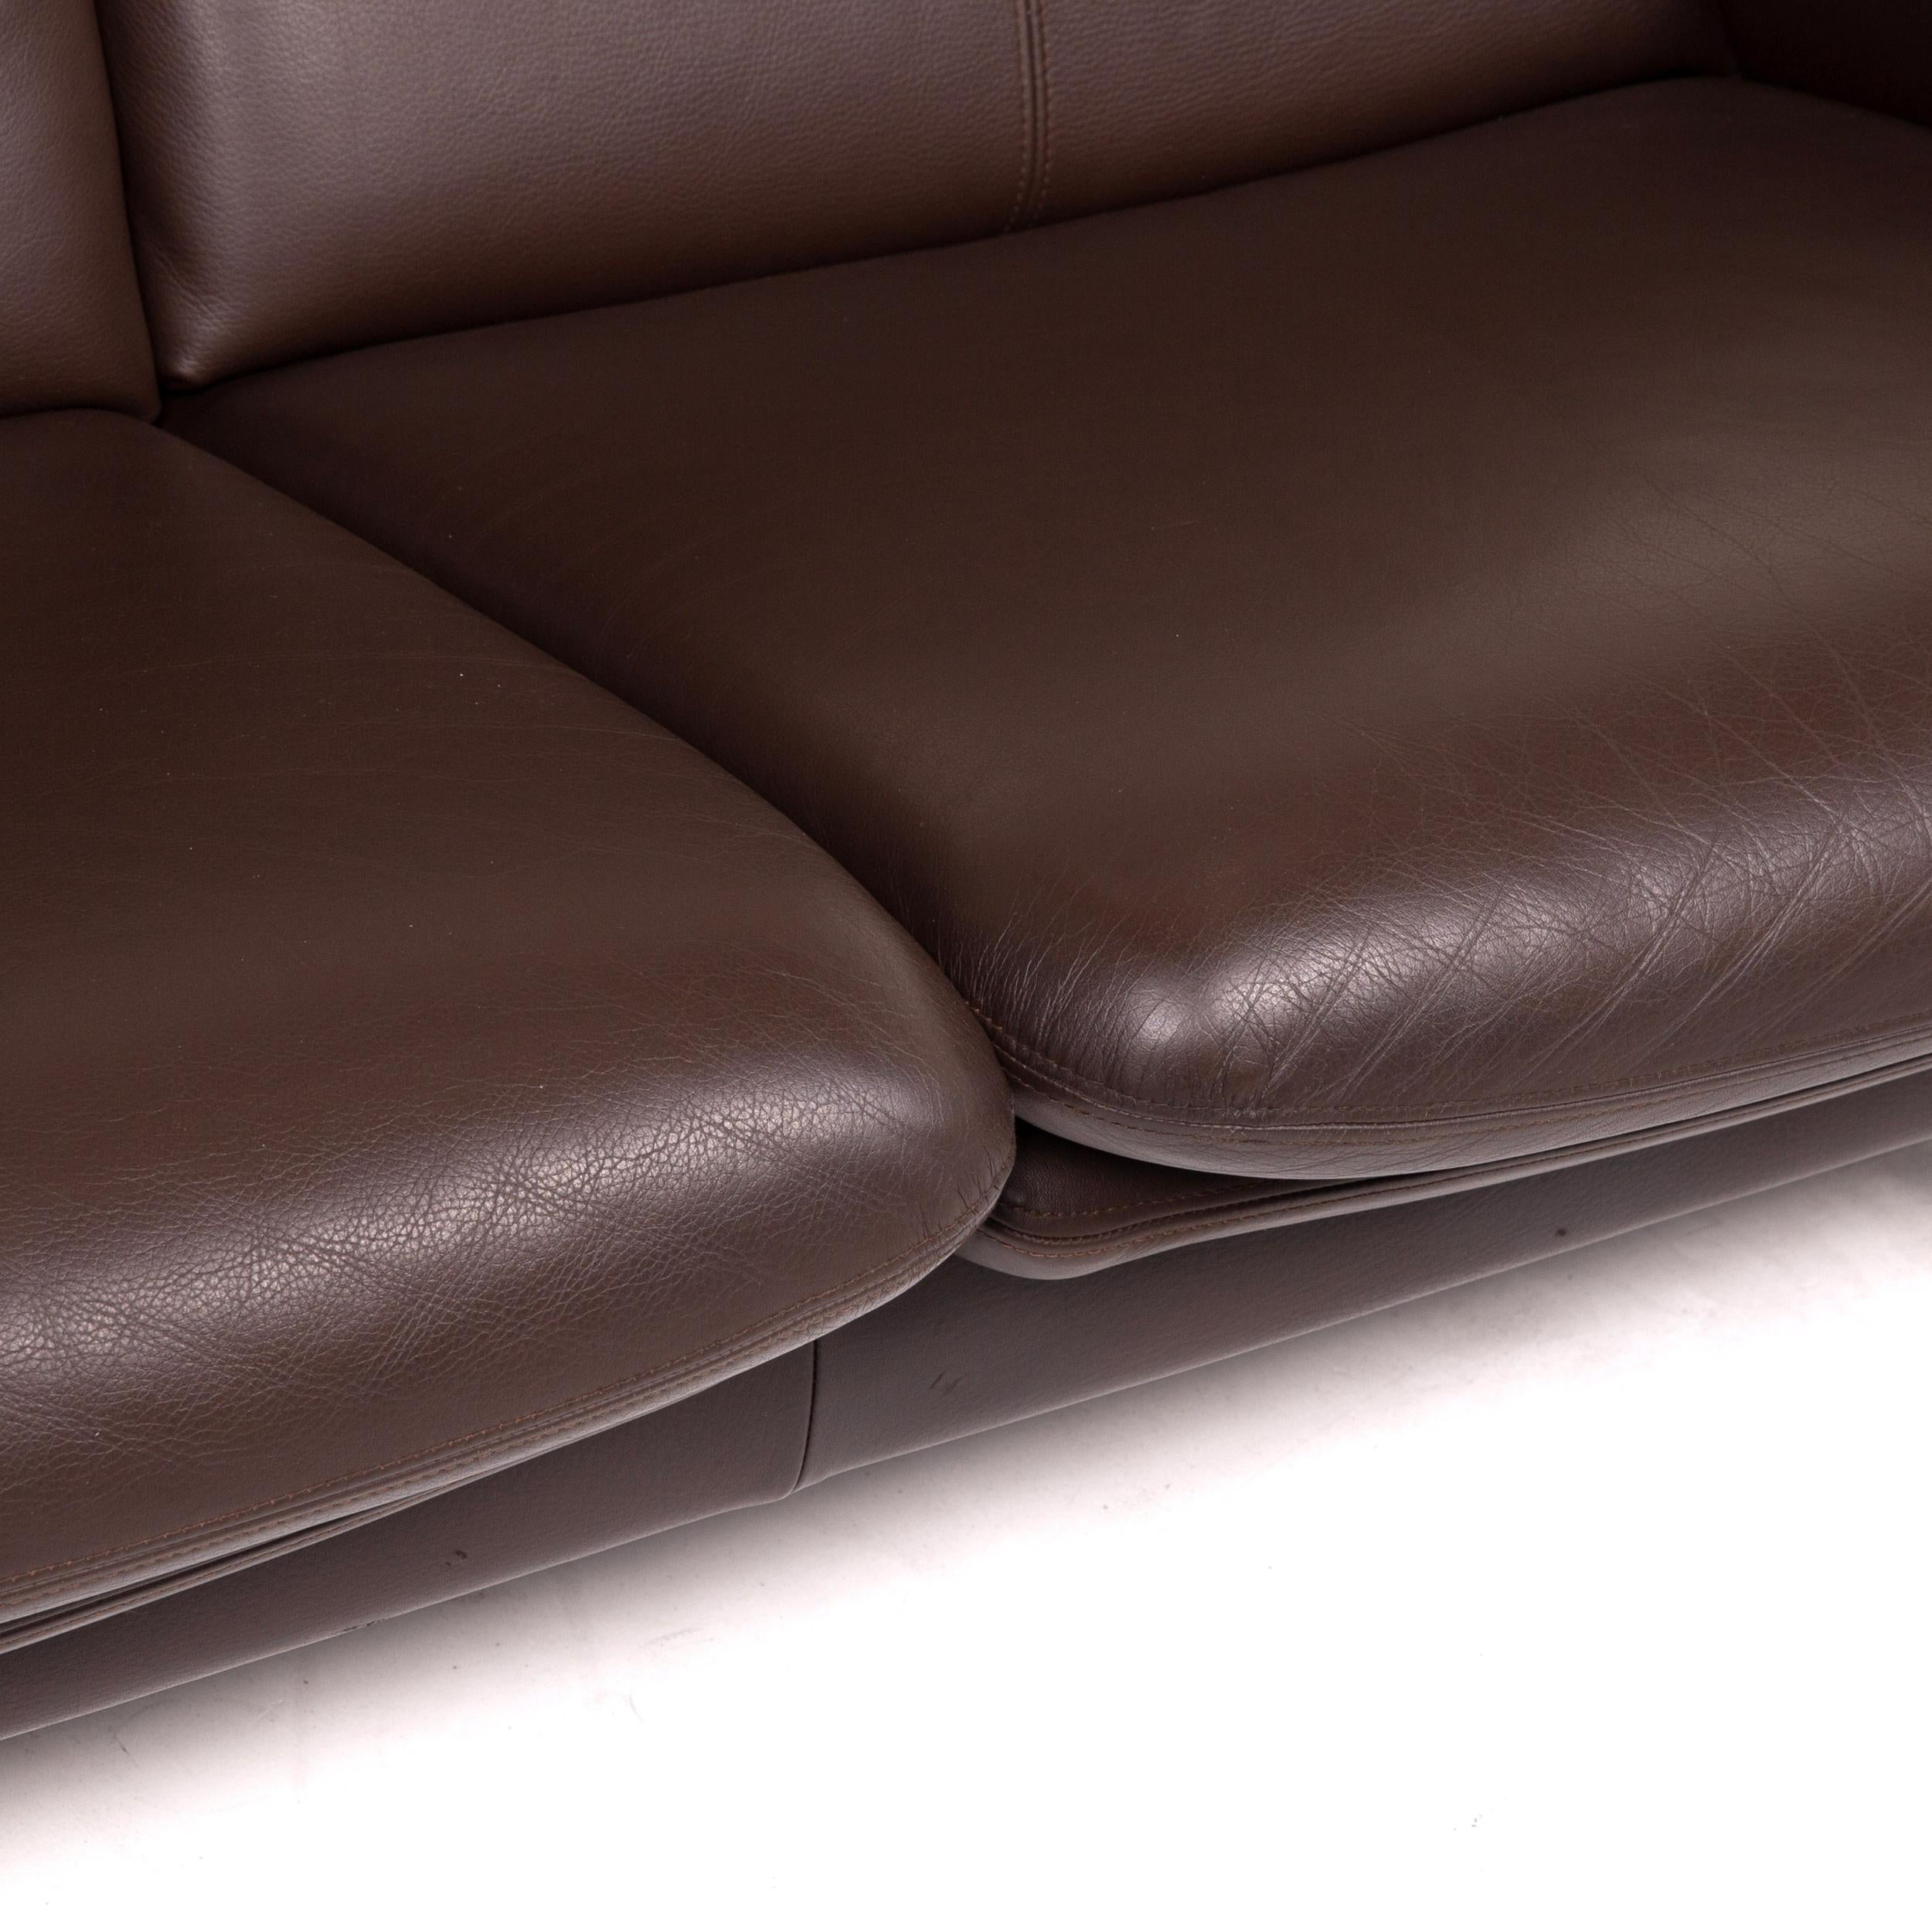 Erpo City Leather Sofa Brown Dark Two Seat Couch For At 1stdibs - Dark Brown Leather Couch Seat Cover